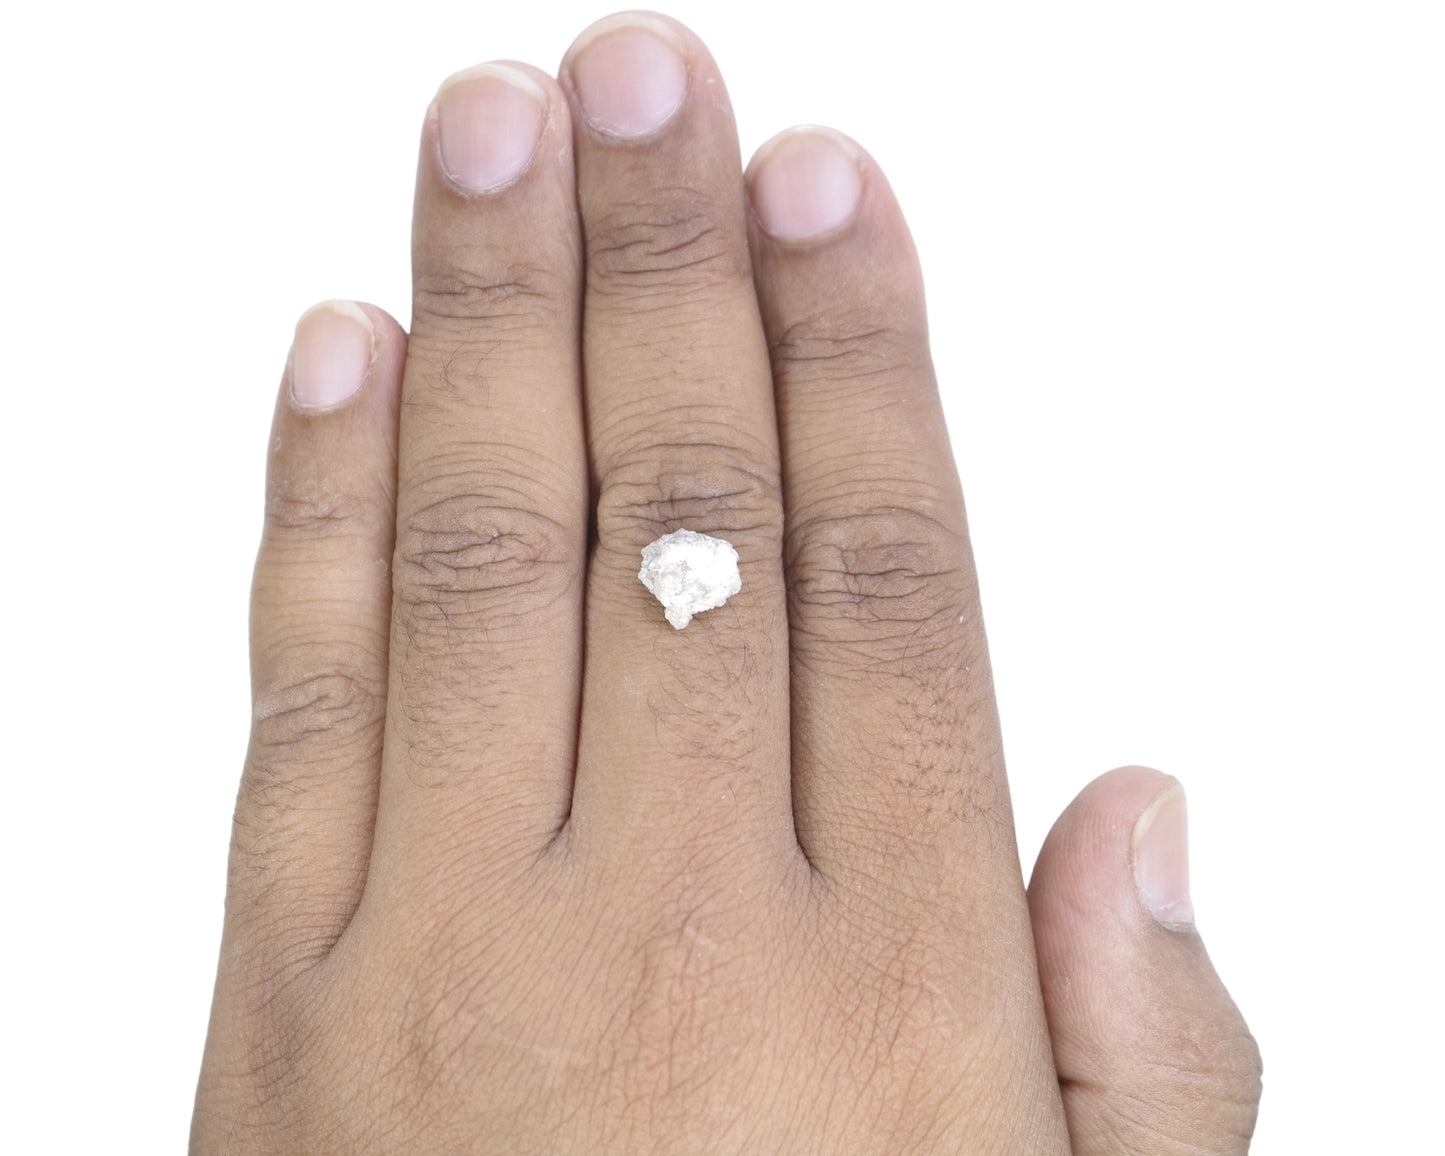 4.52 CT Rough Uncut Snow White Diamond For Proposal Ring | Diamond Pendant